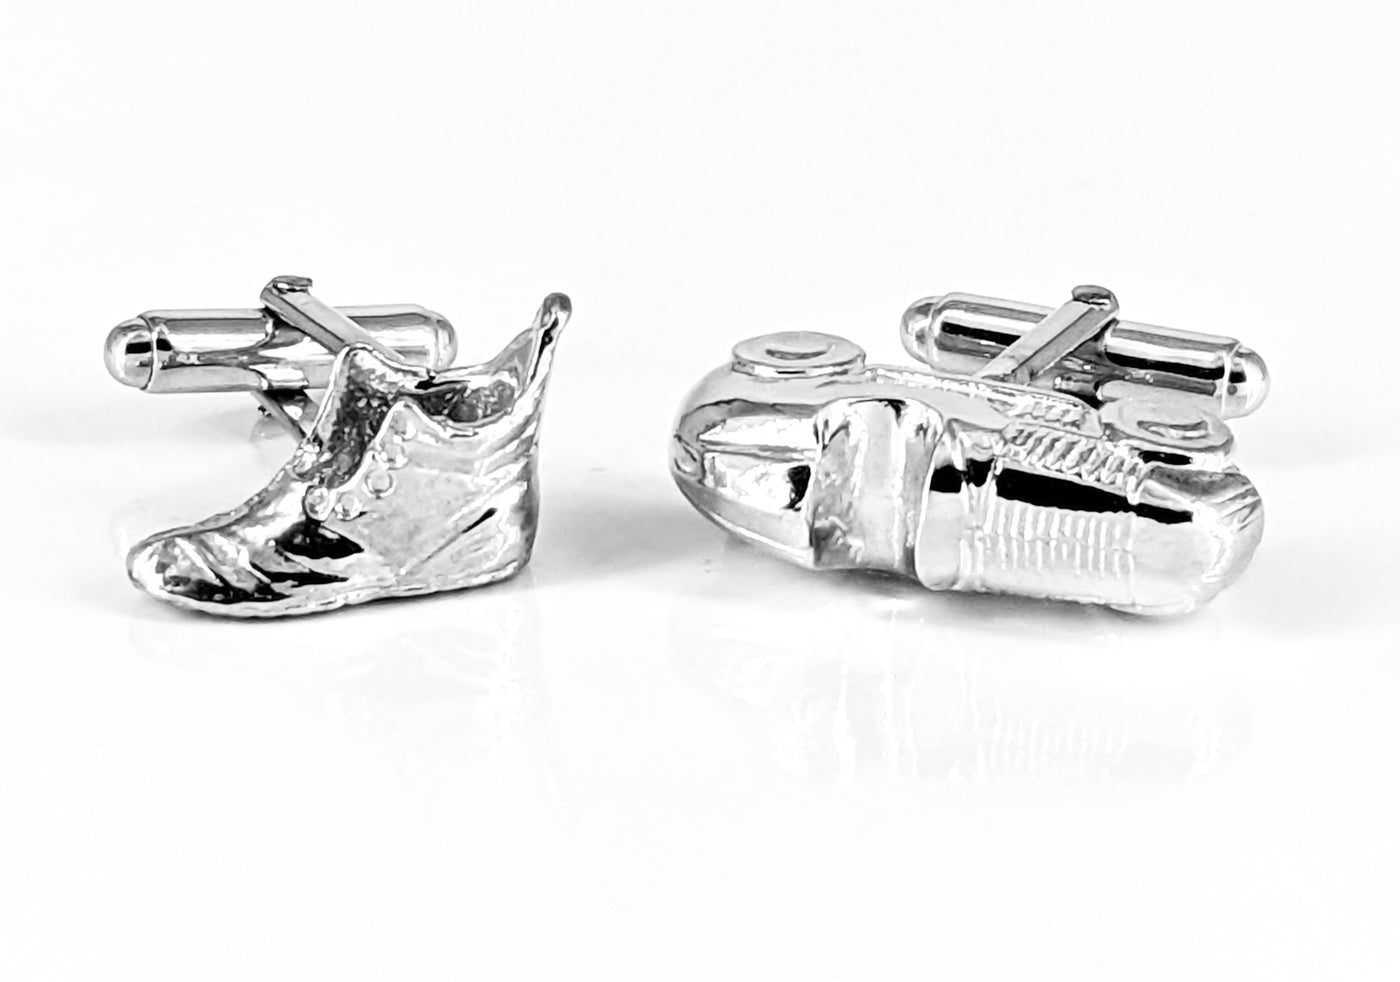 Handmade Sterling Silver Shoe and Racecar Cufflinks